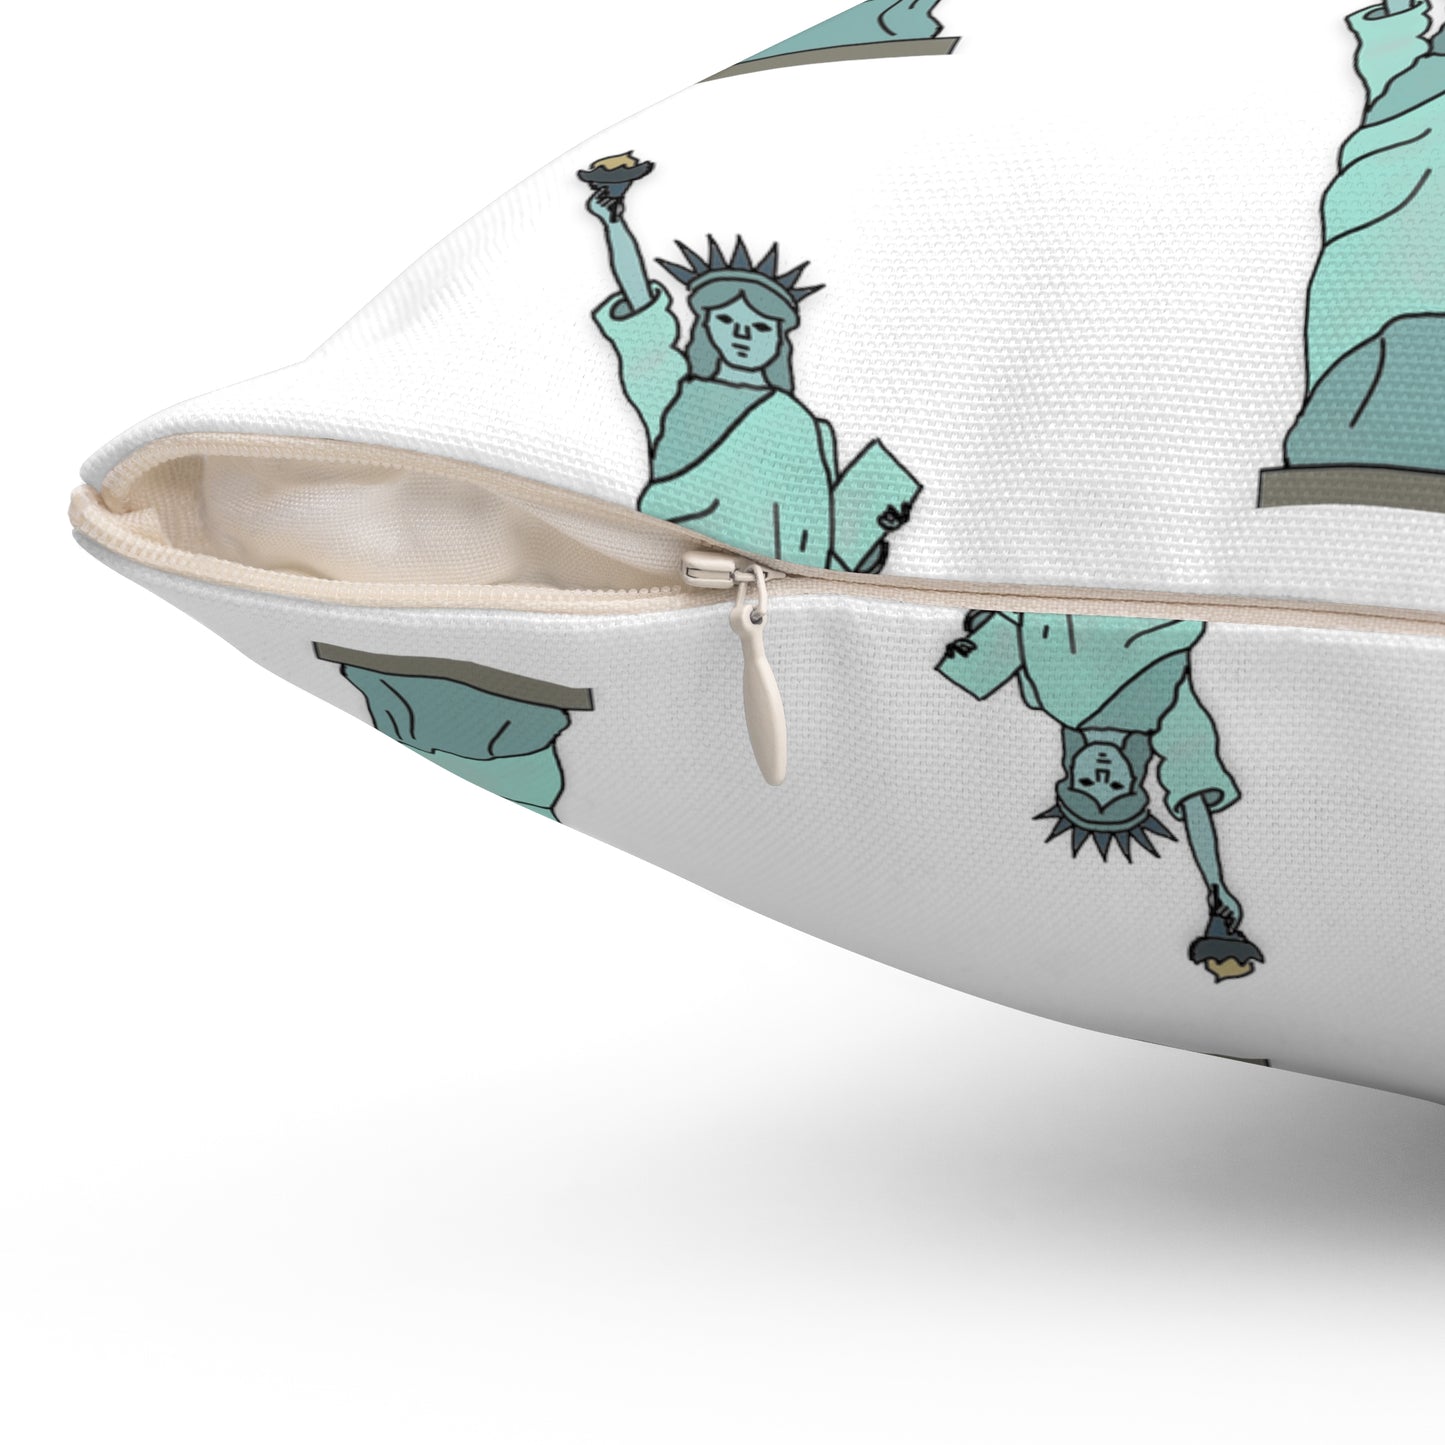 Lady Liberty Pillow